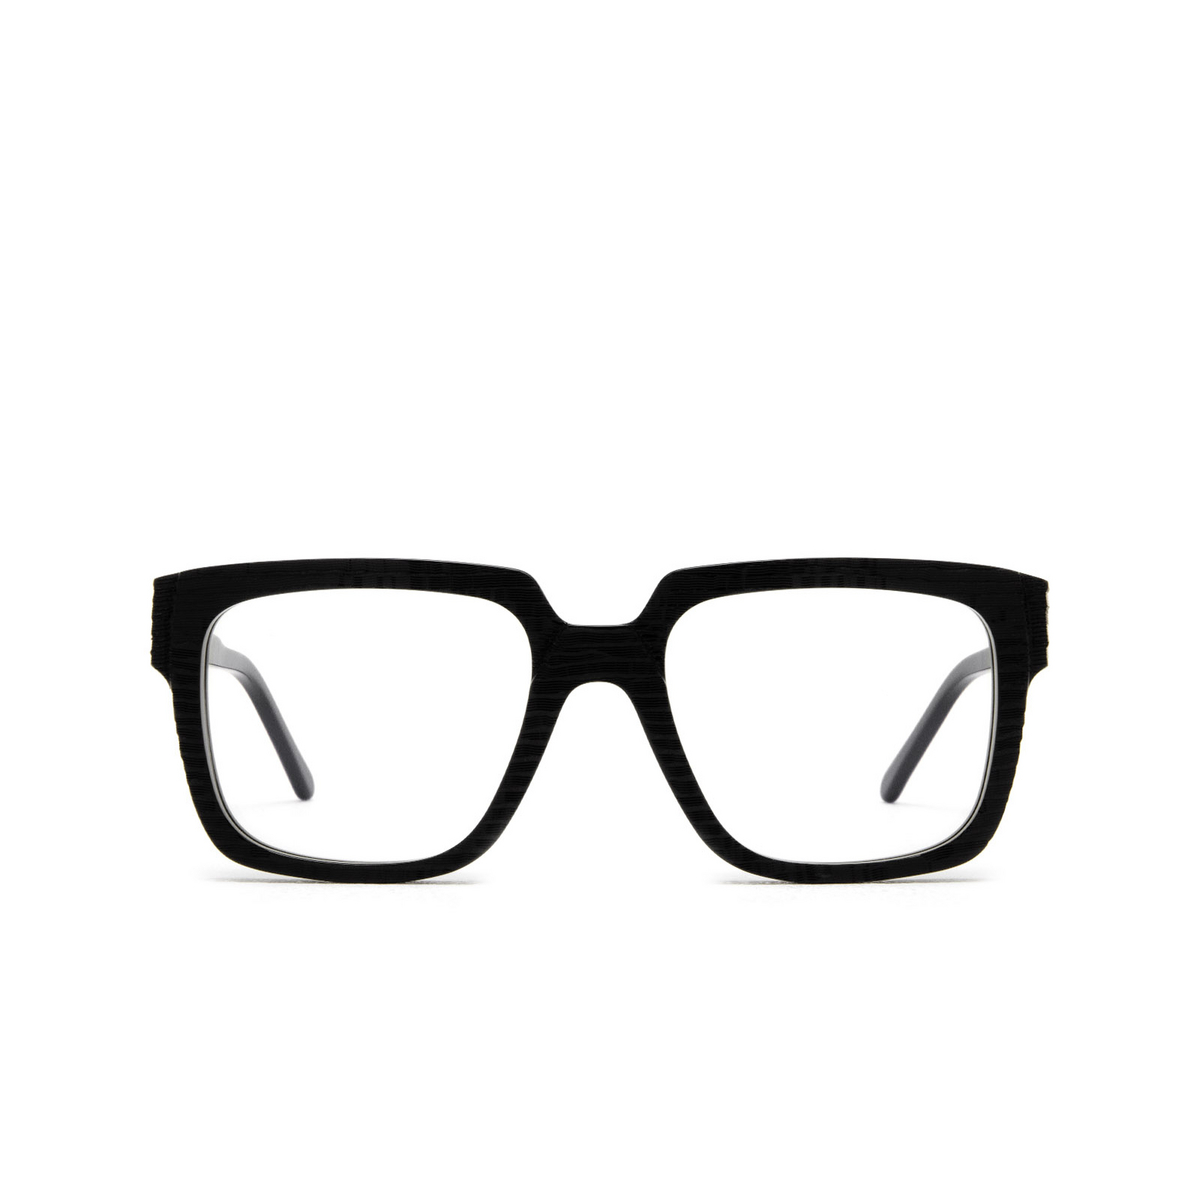 Kuboraum® Square Eyeglasses: K3 color Black Shine & Handcraft Finishing Bs Nt - front view.